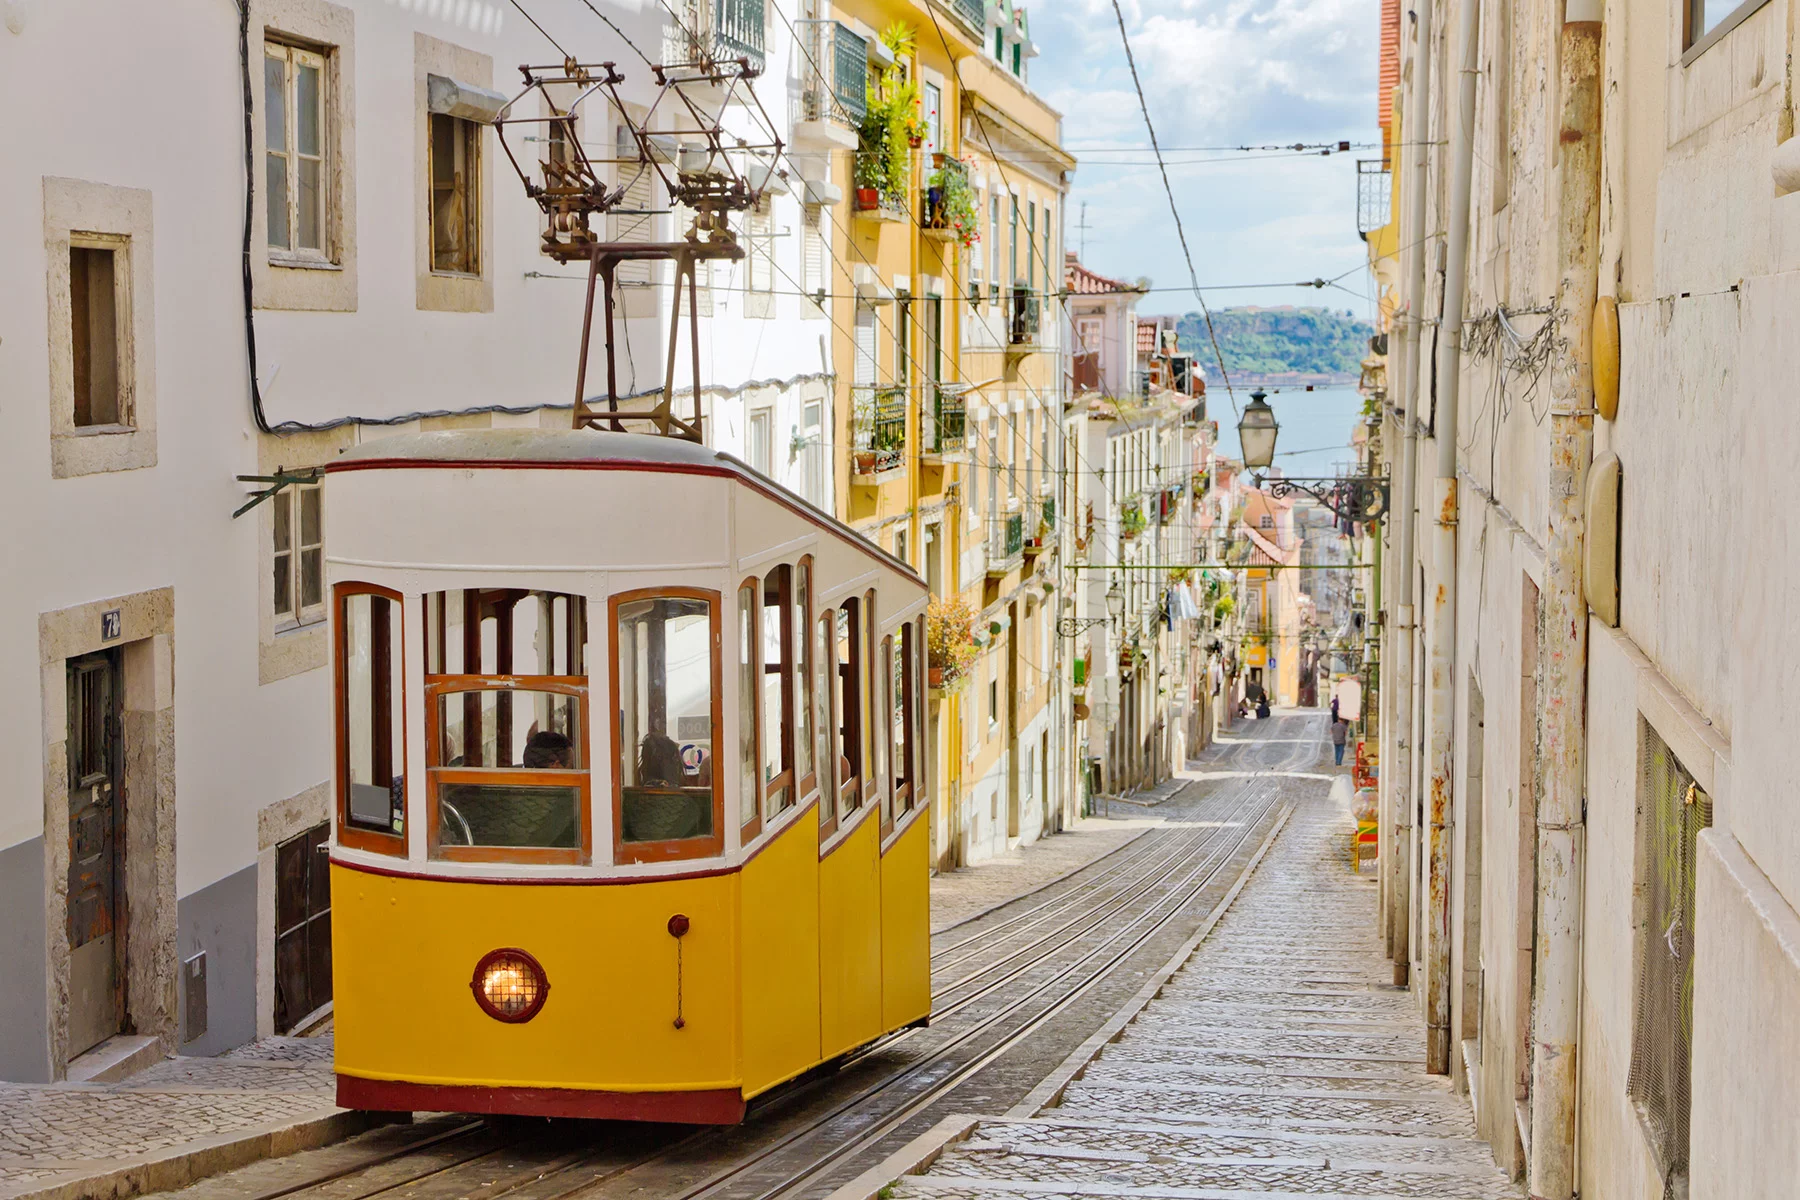 Historical tram on an old street in Lisbon